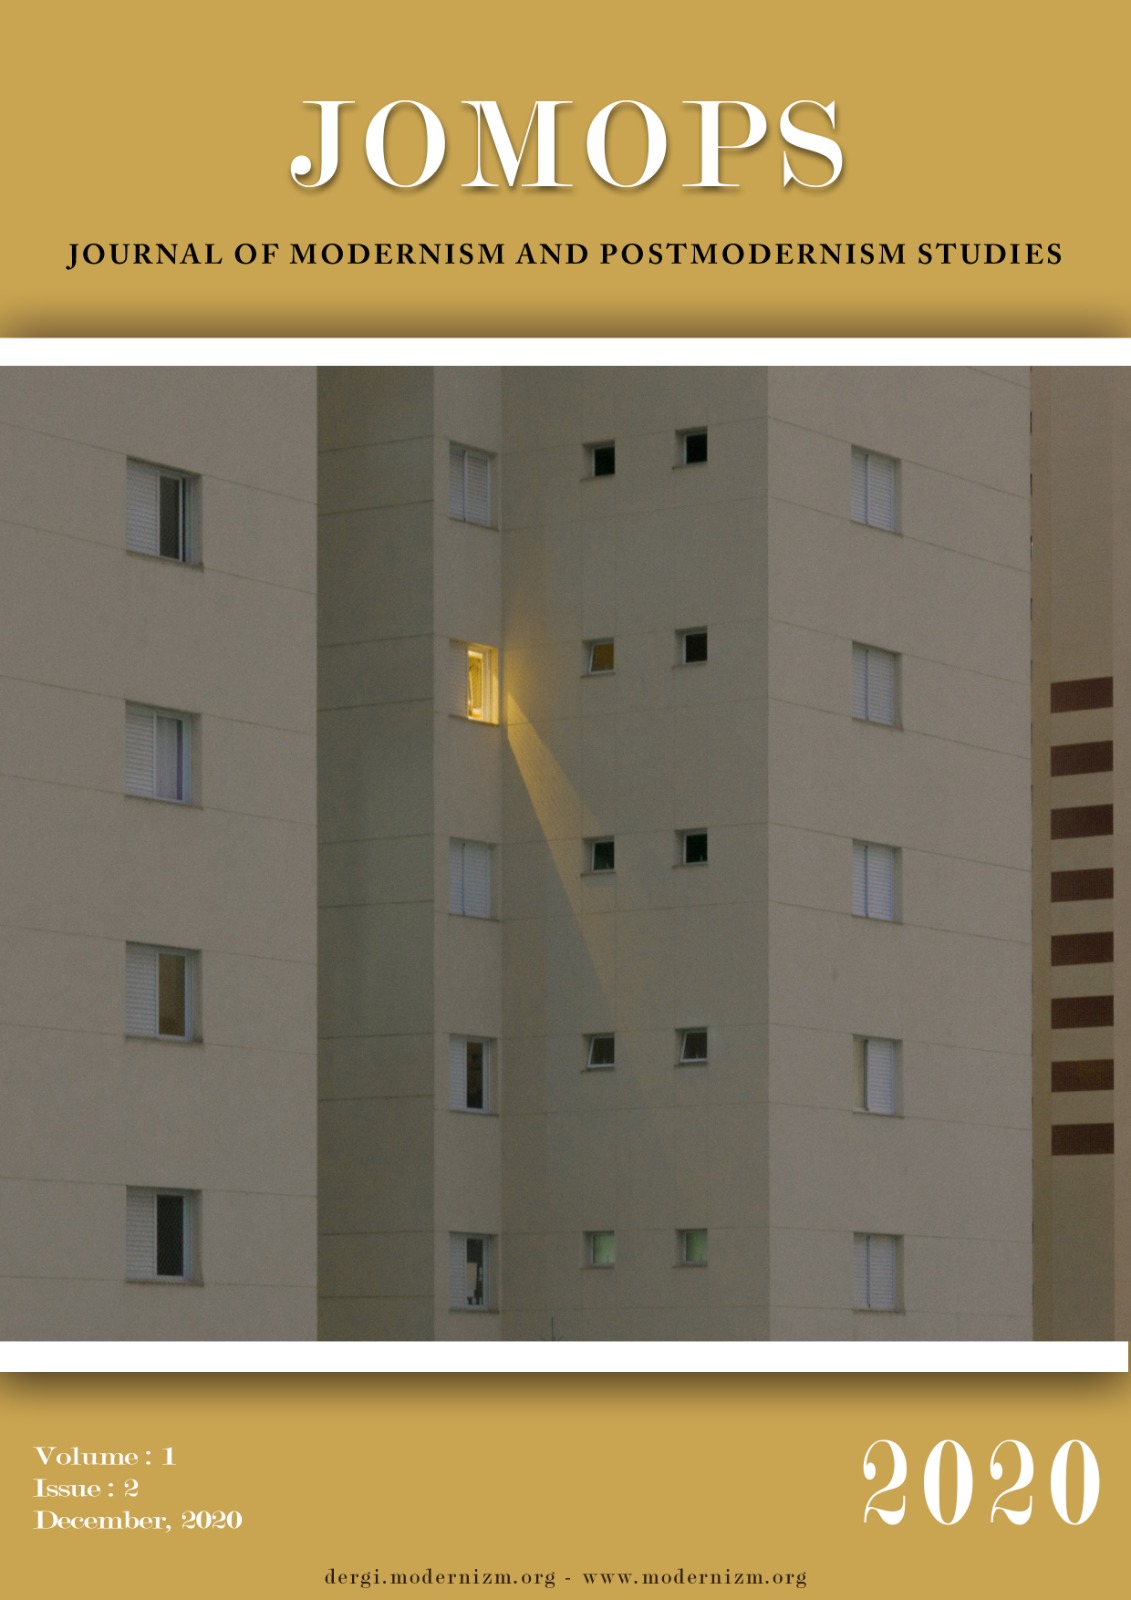 Journal of Modernism and Postmodernism Studies